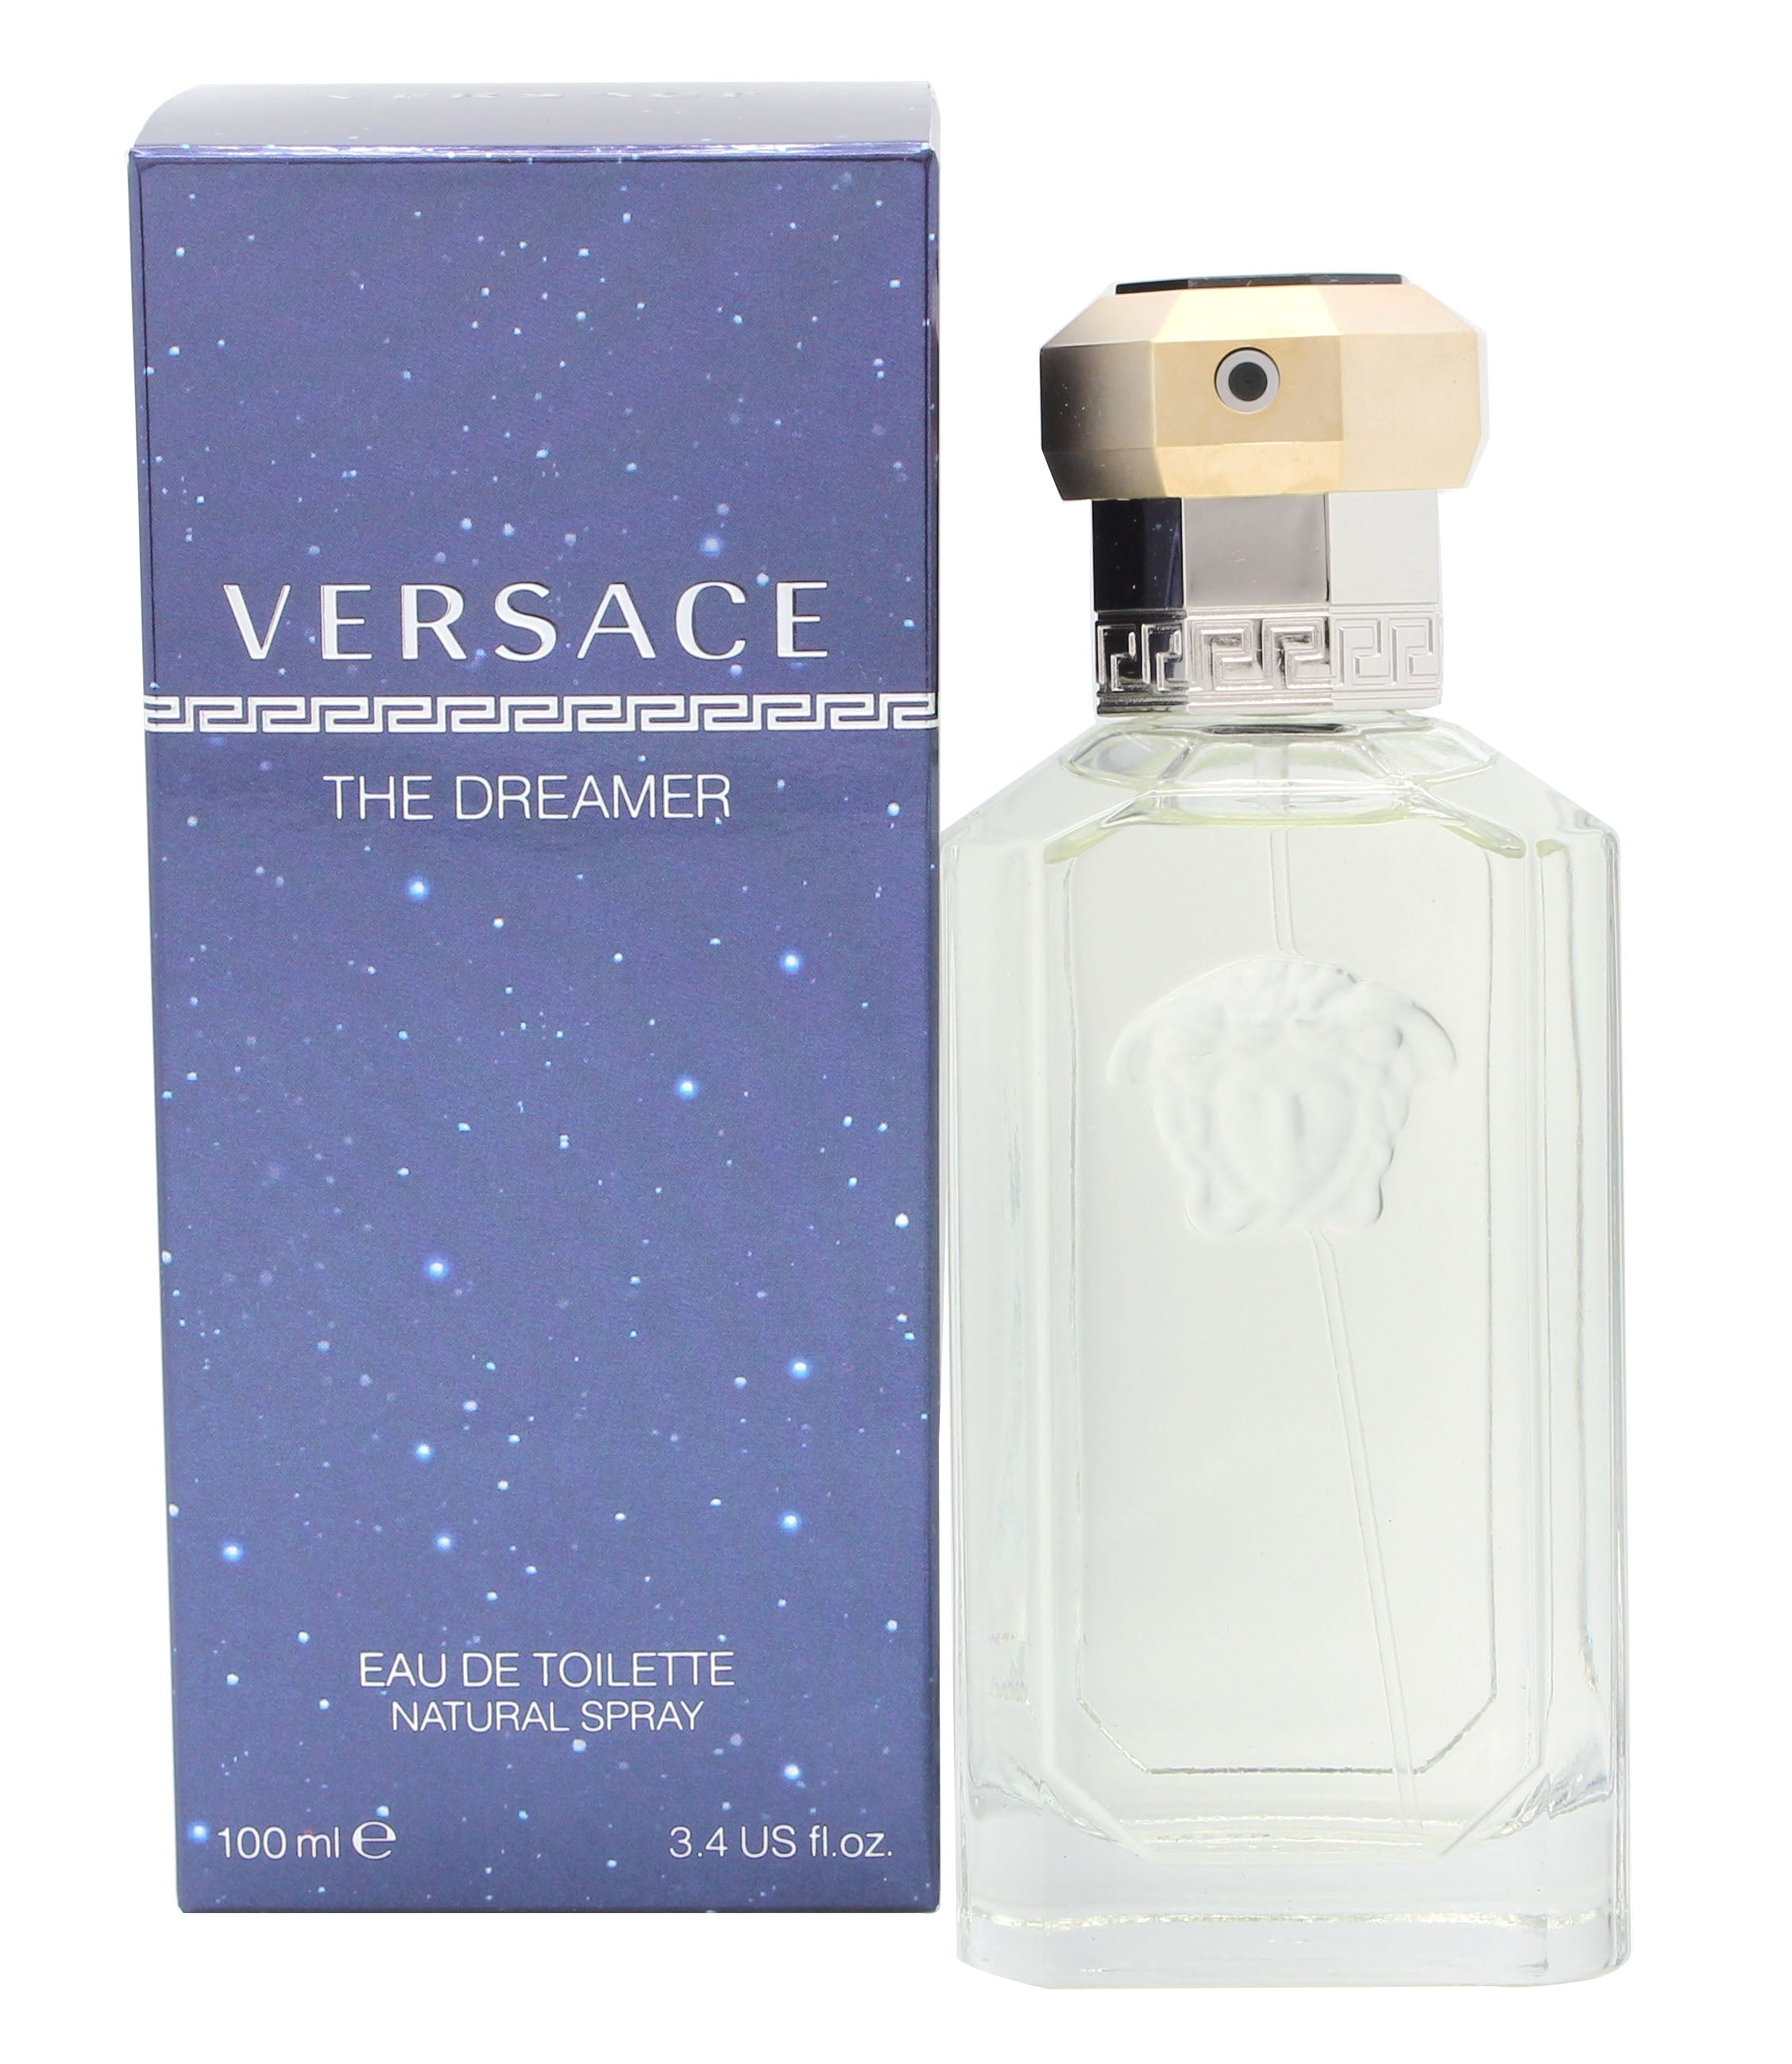 View Versace The Dreamer Eau de Toilette 100ml Spray information